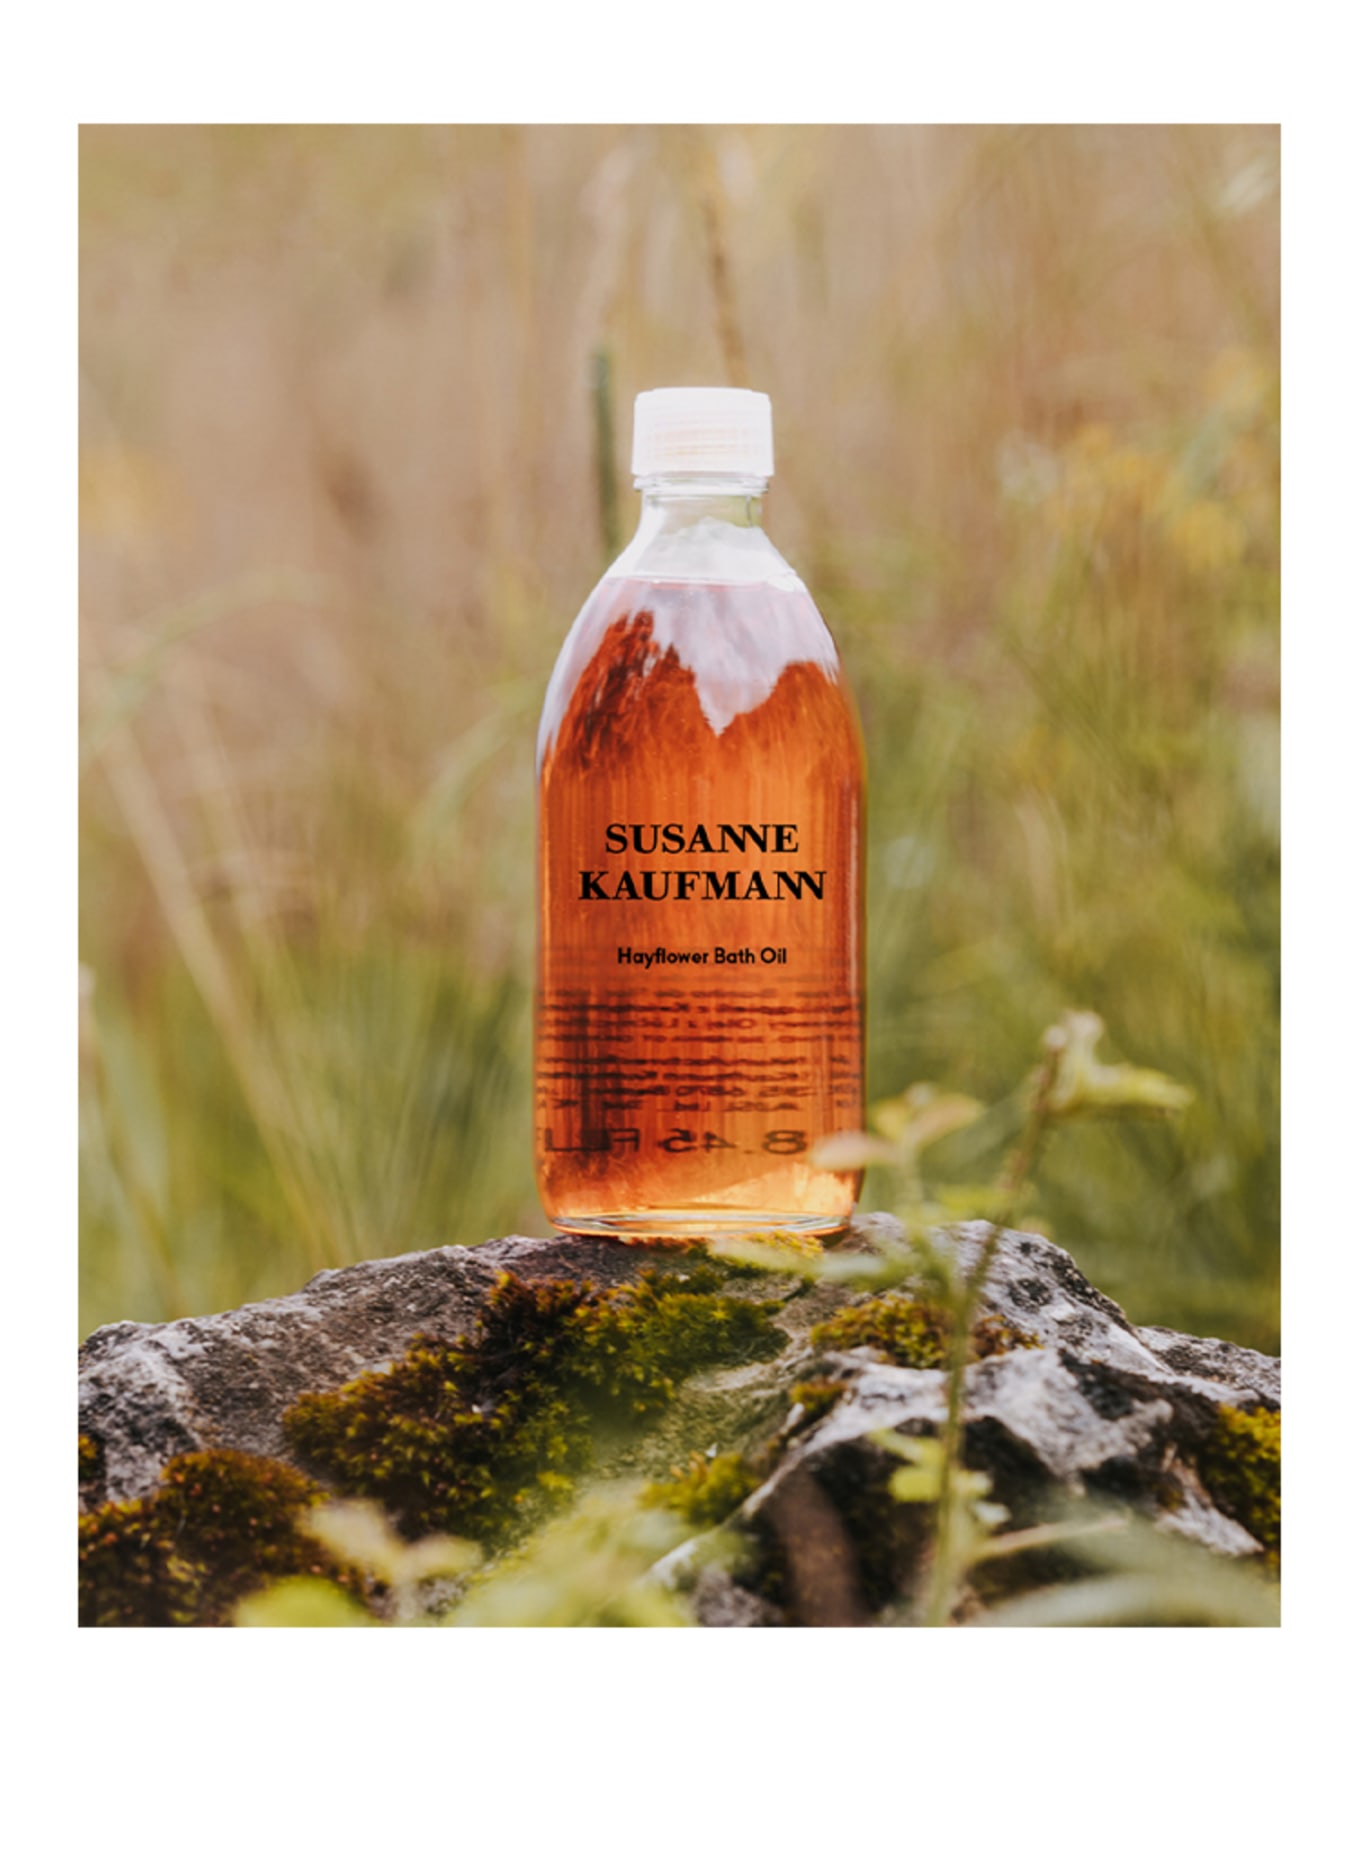 SUSANNE KAUFMANN HAYFLOWER BATH OIL (Obrazek 2)